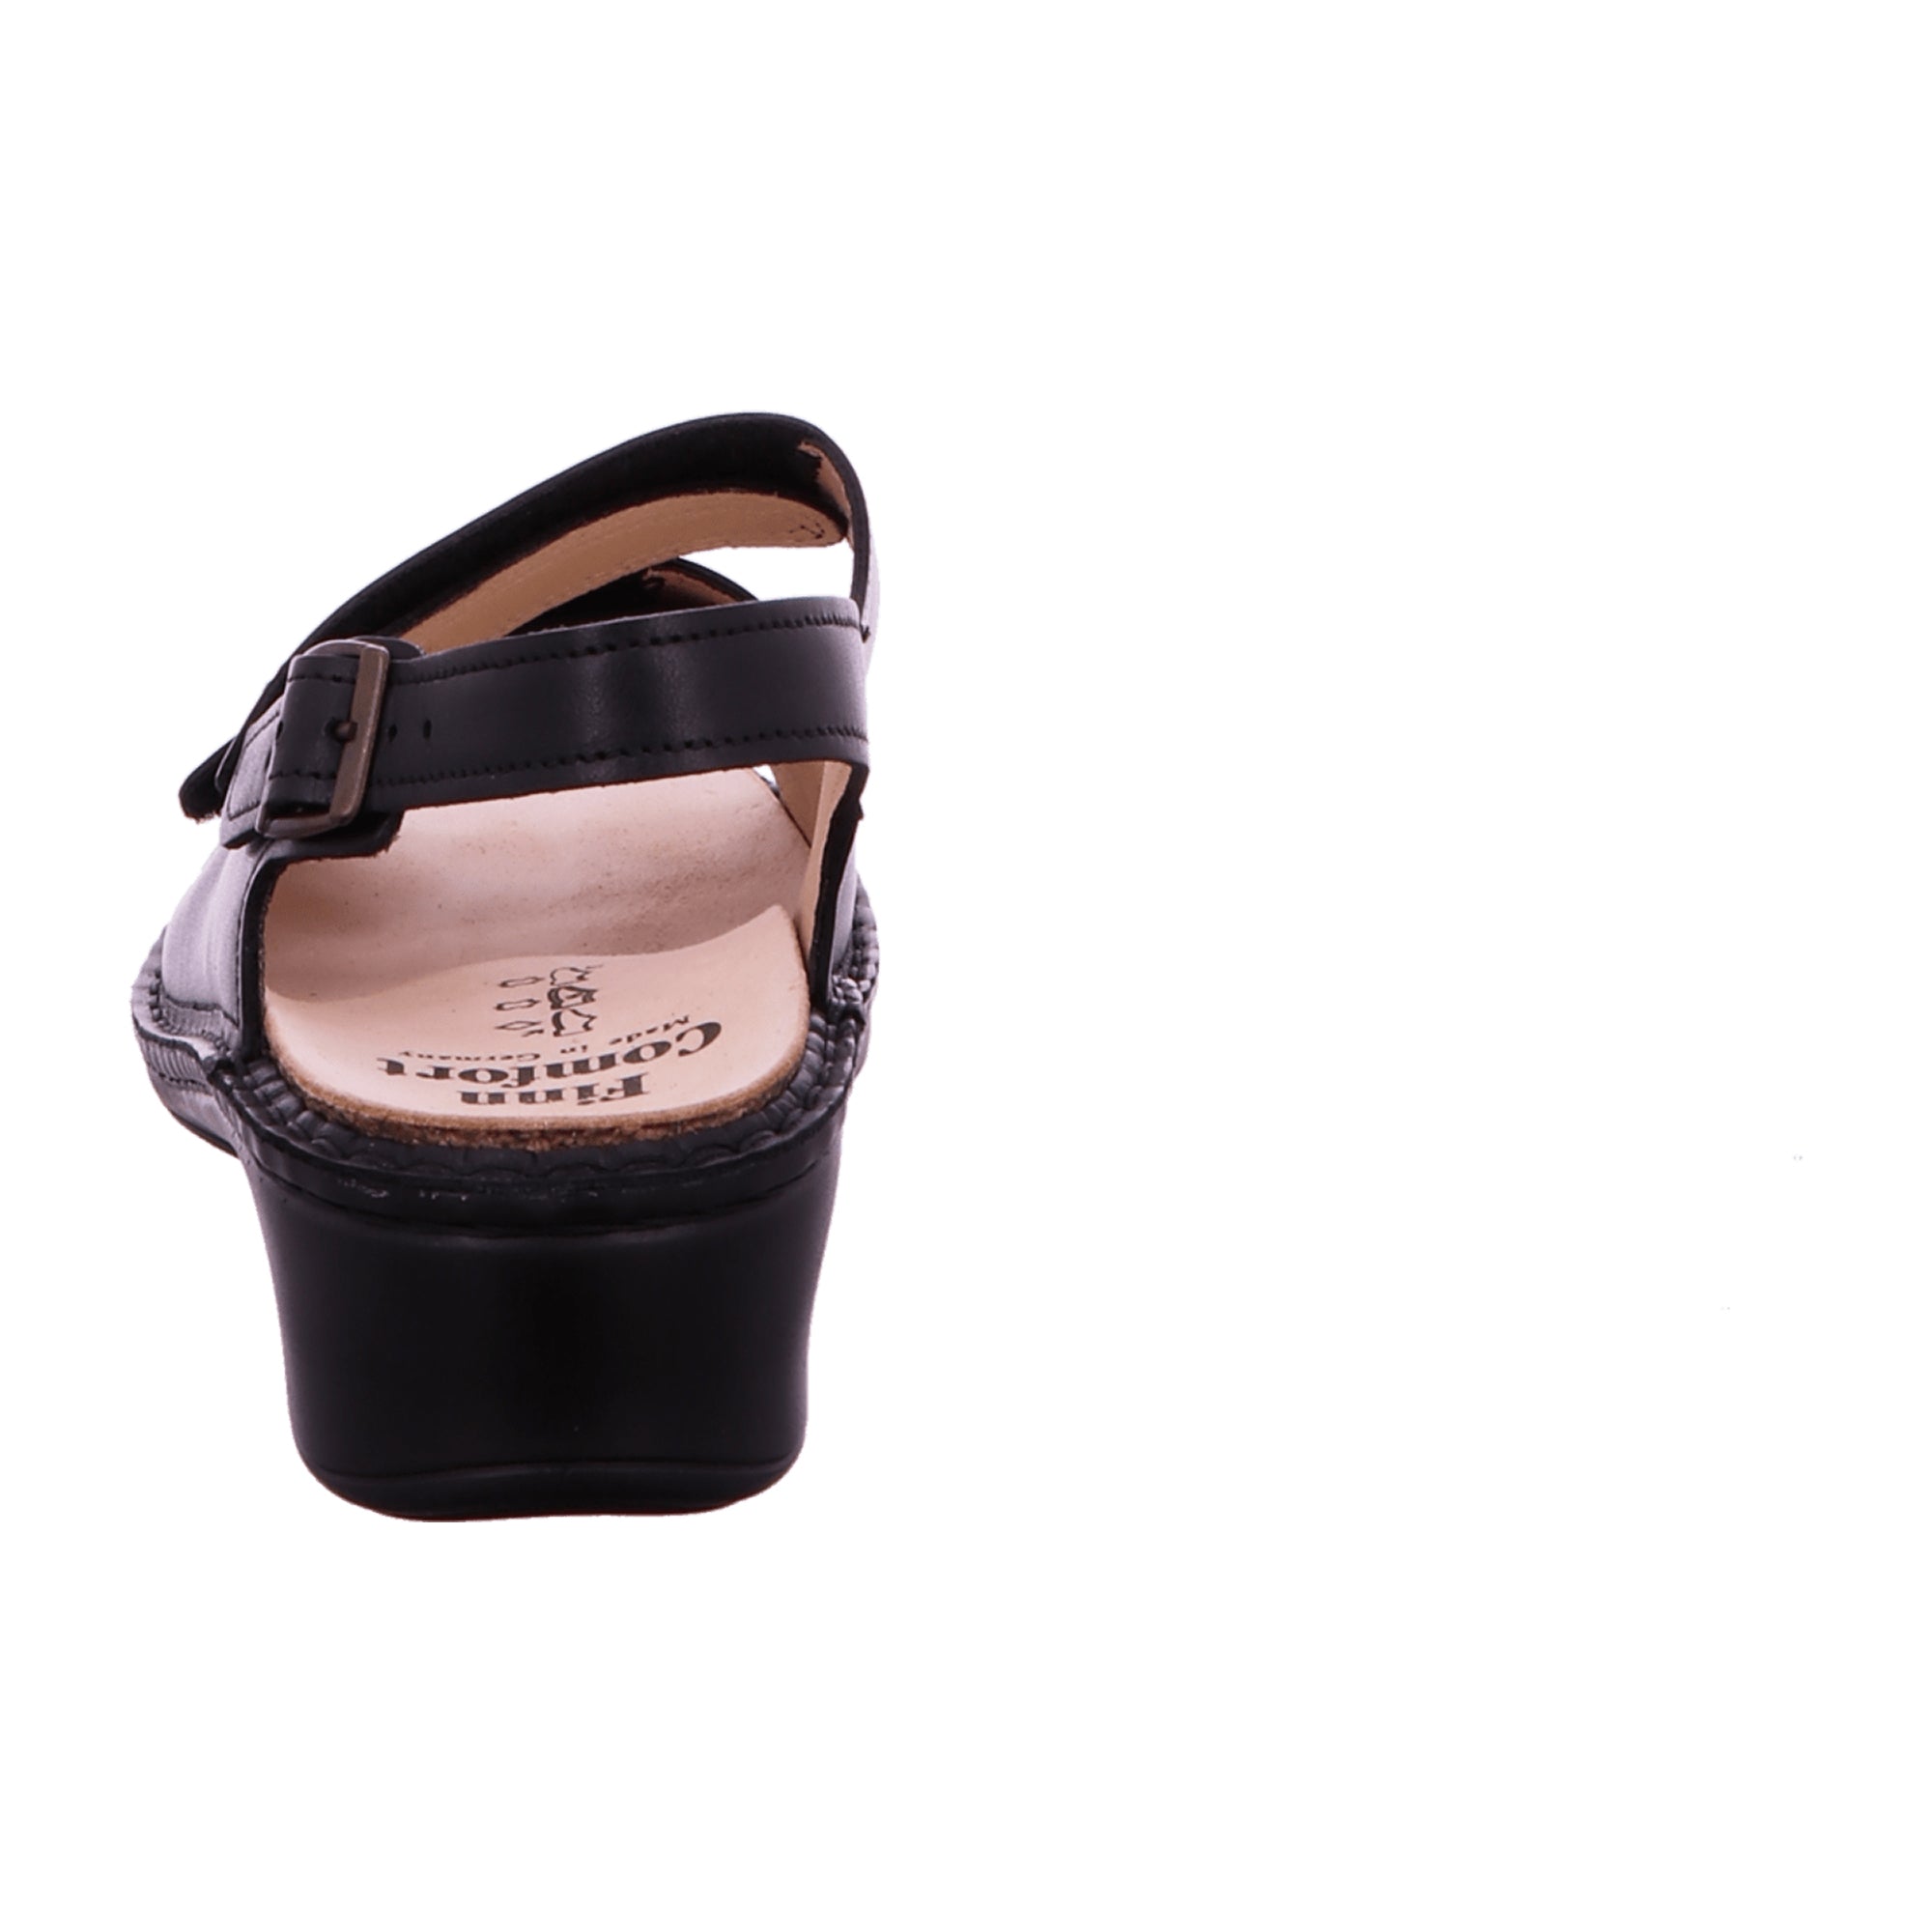 Finn Comfort Samoa Women's Black Sandals - Comfortable & Stylish Footwear